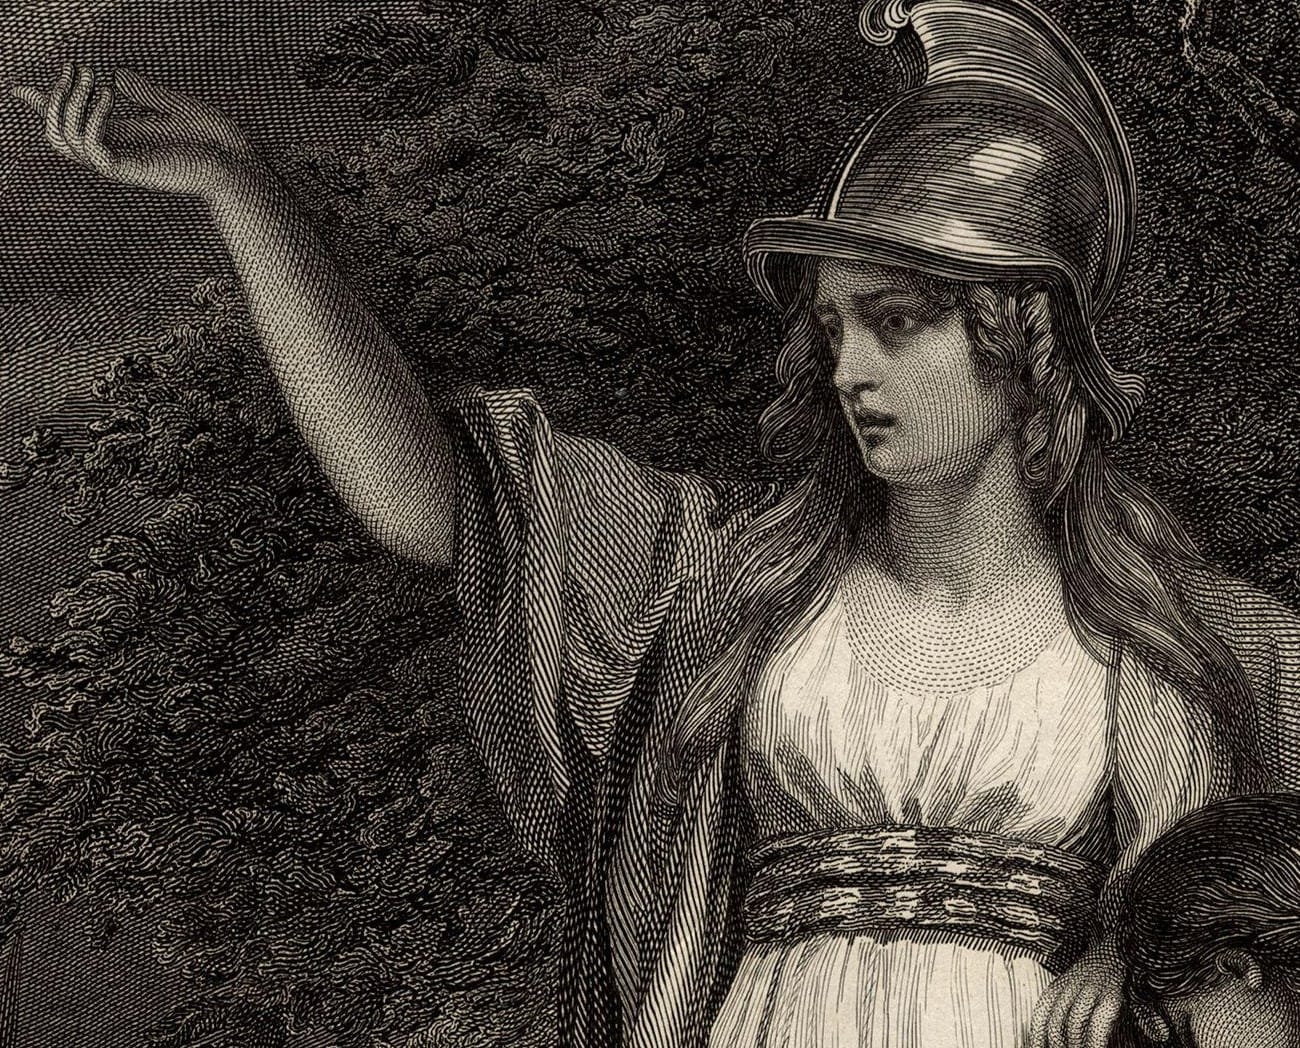 Boadicea Haranguing the Britons (called Boudicca, or Boadicea) by John Opie.